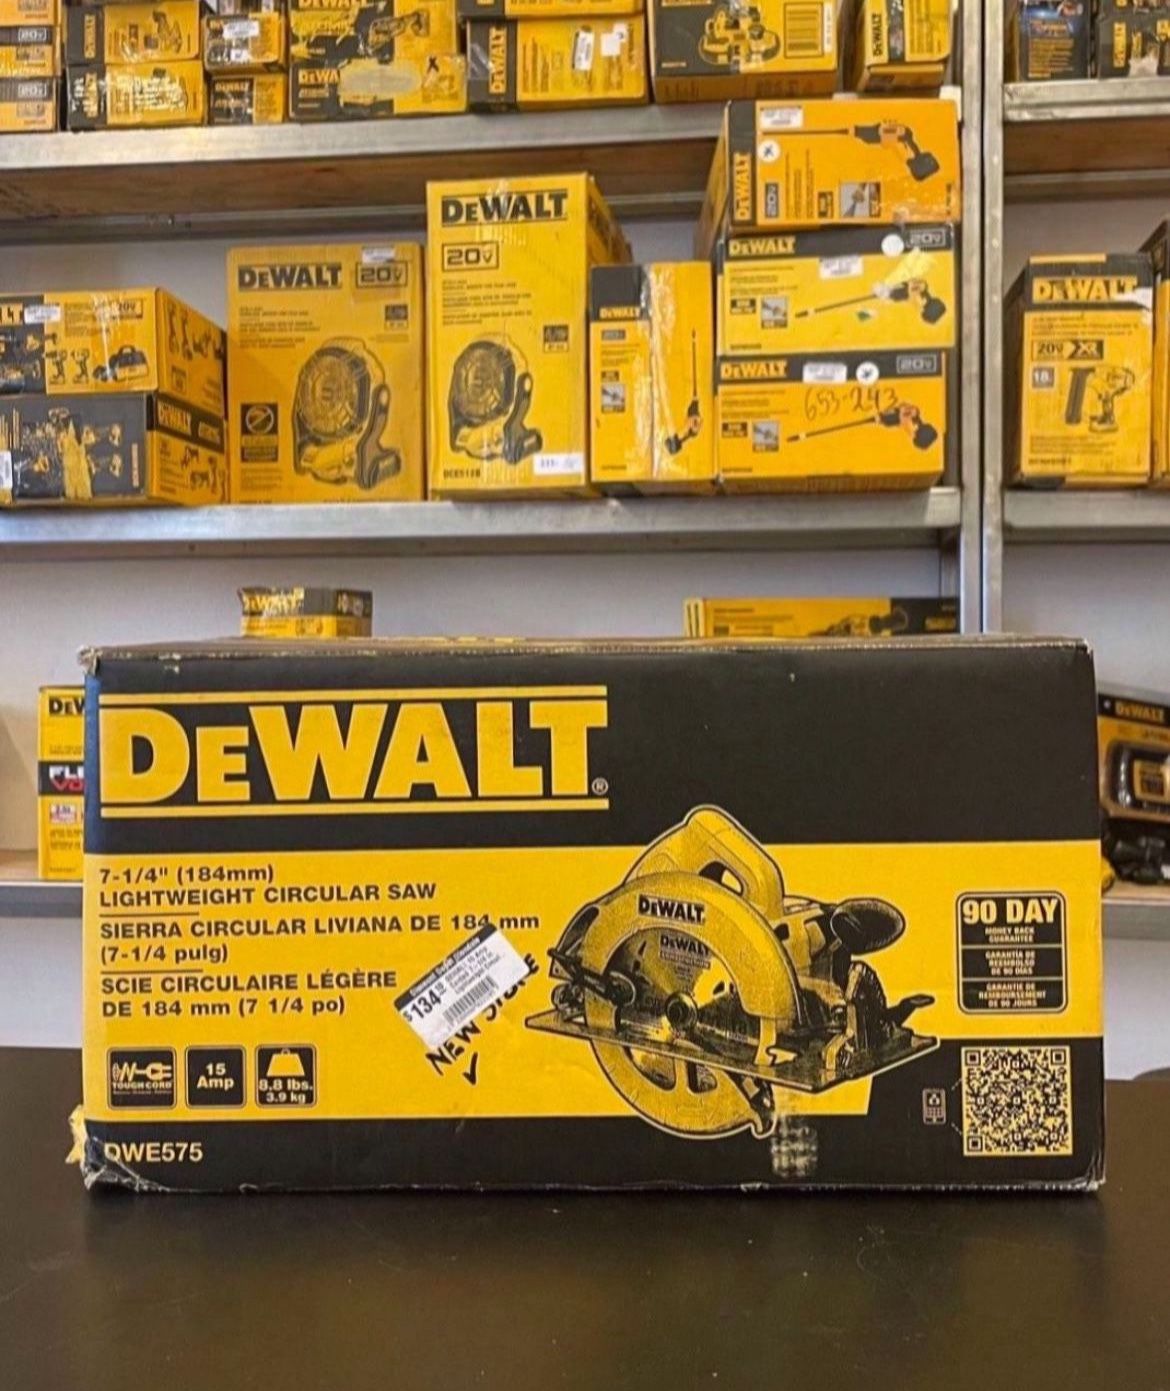  DEWALT 15 Amp Corded 7-1/4 in. Lightweight Circular Saw ……DWE575